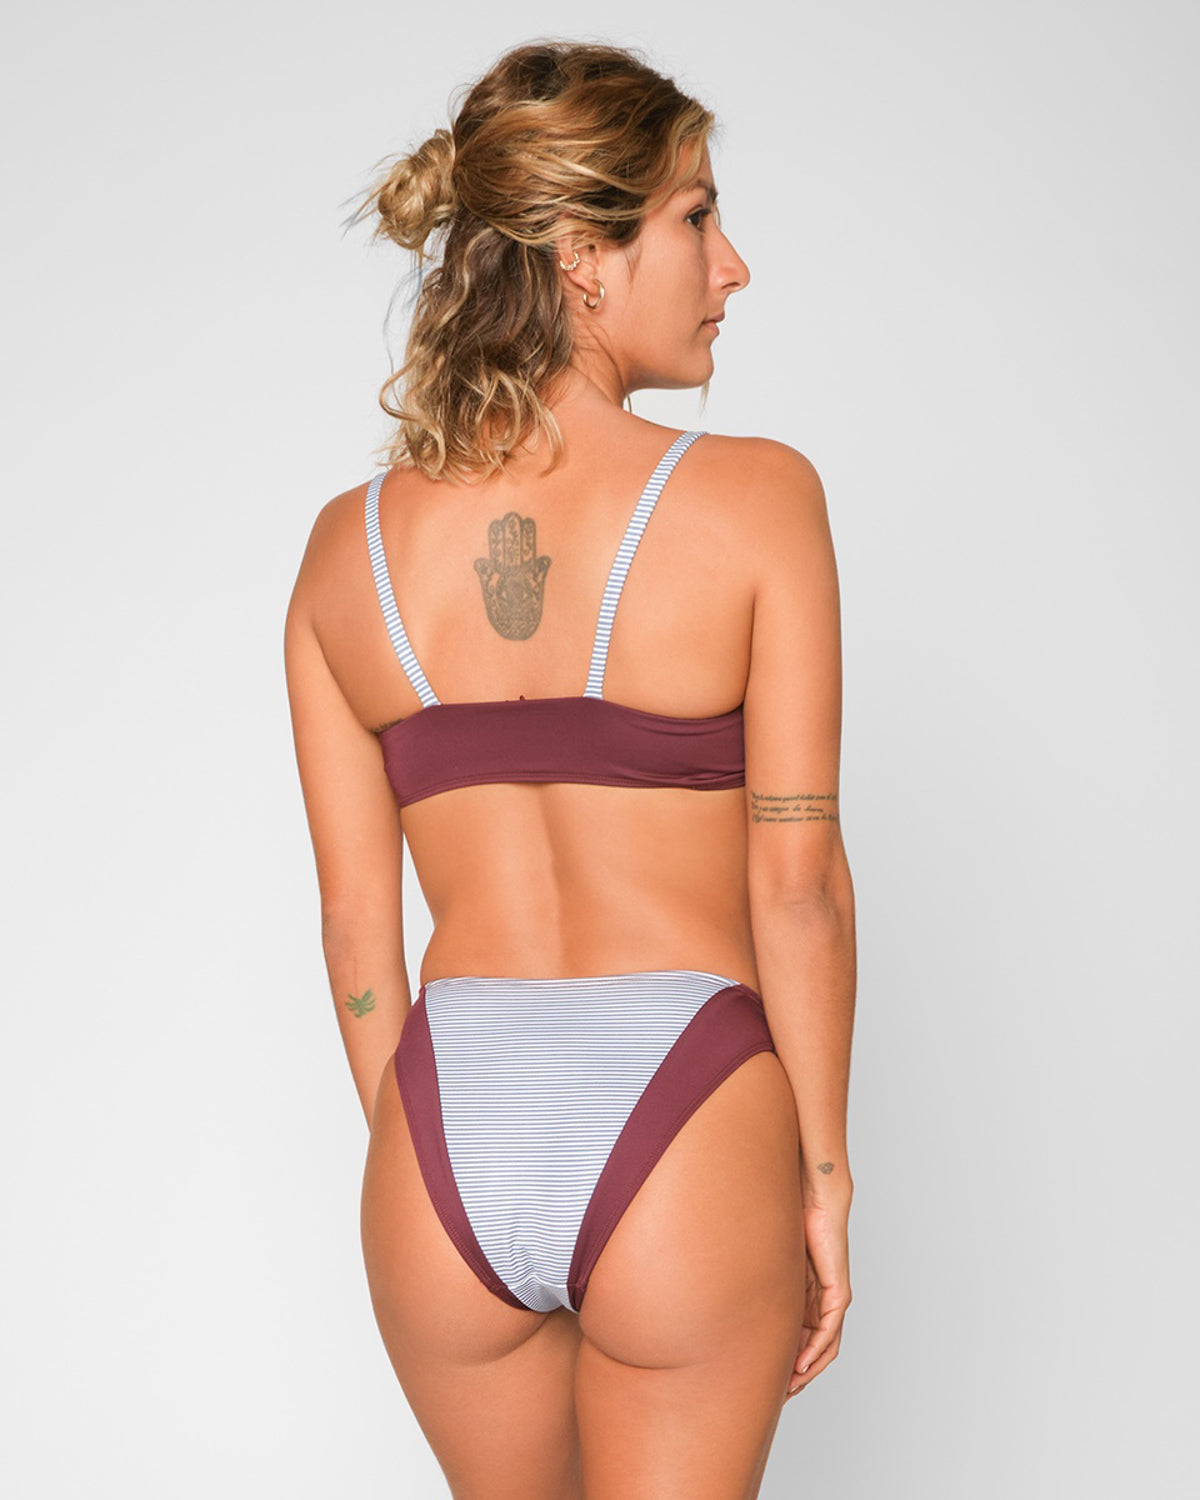 Vega Bikini Top - Sailor Stripe